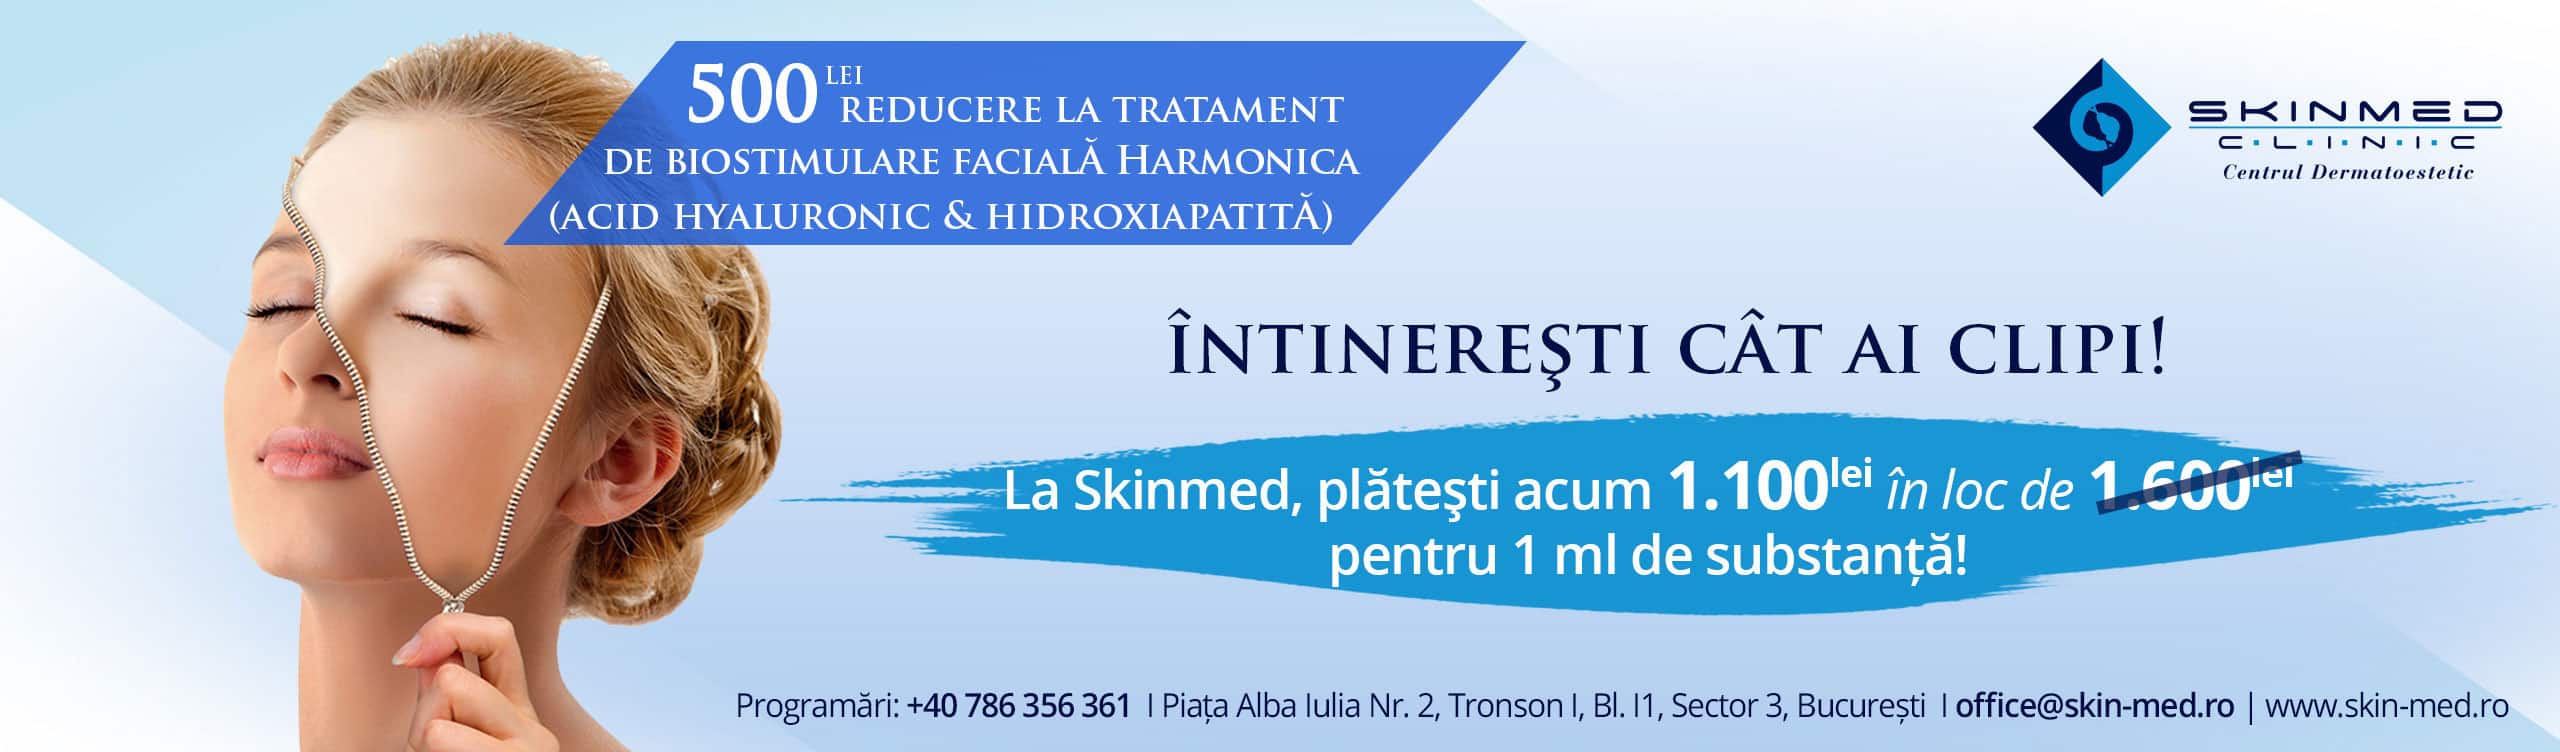 banner site biostimulare faciala Harmonica var - skinmed